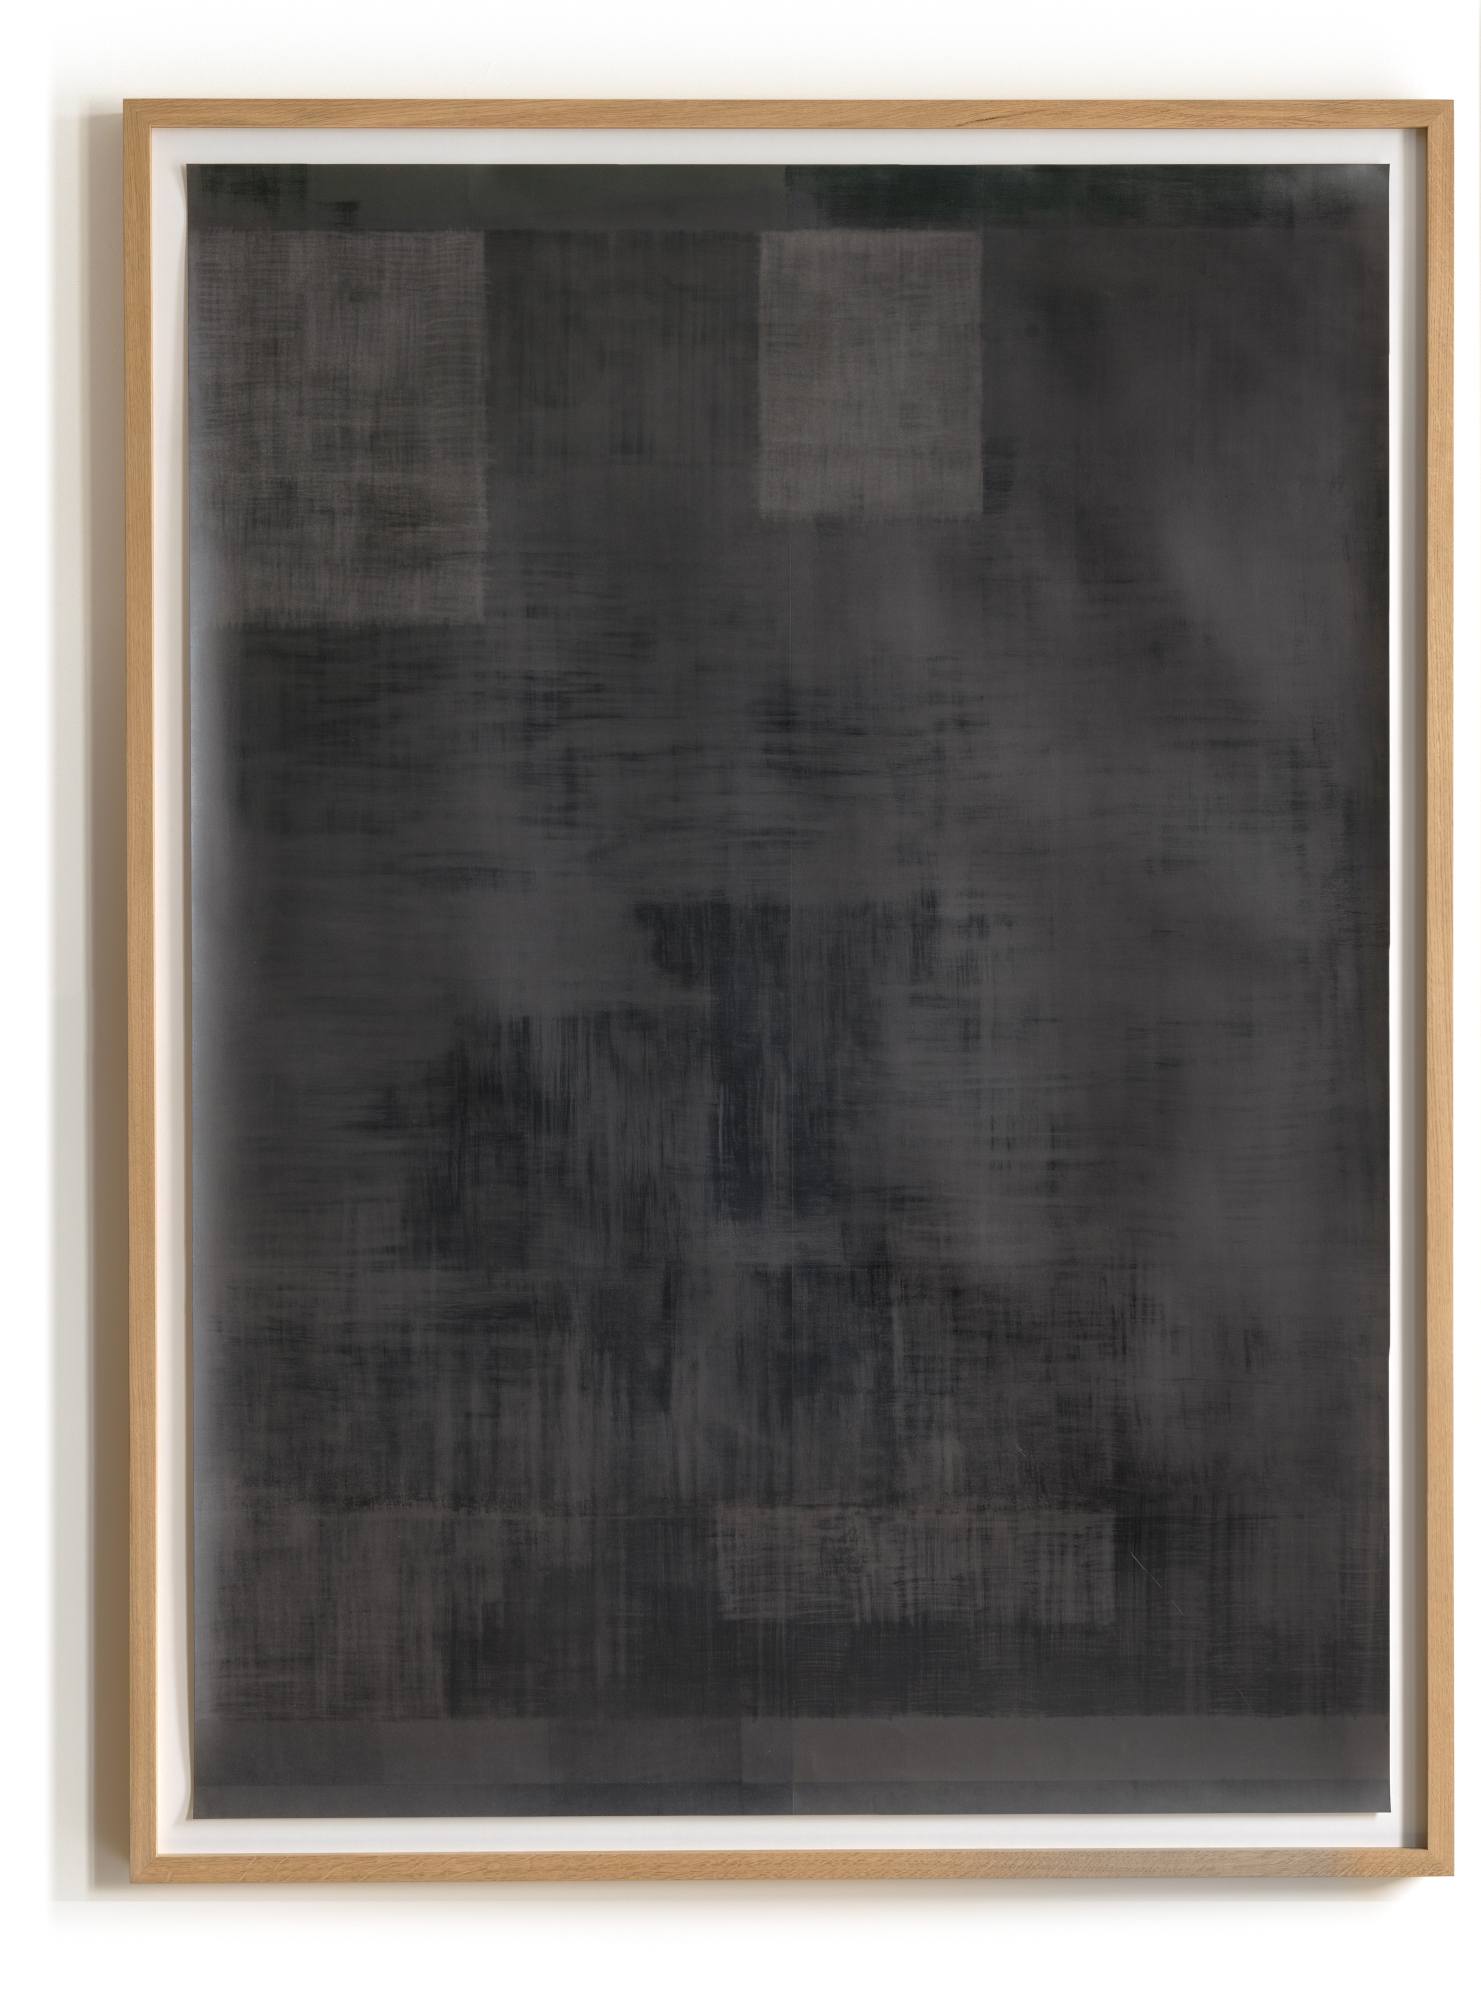 Image:zone, graphite on paper, 155x112cm, 2015